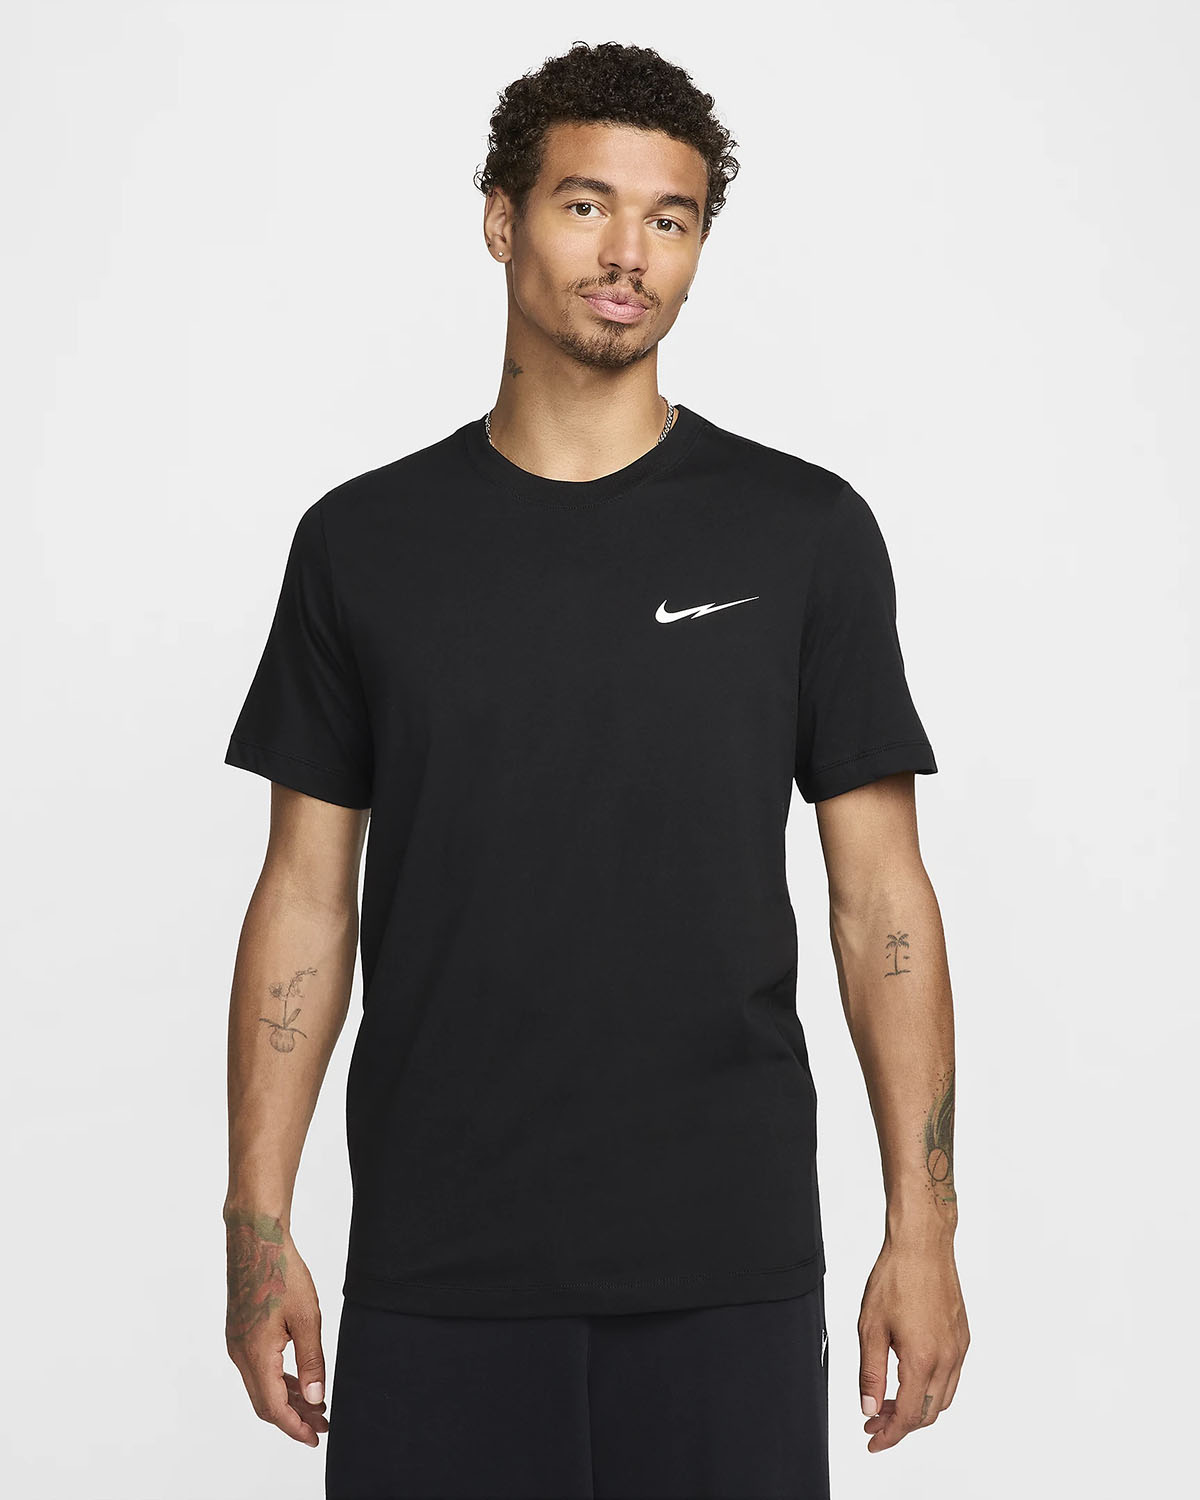 Nike Sportswear T Shirt Black White 1